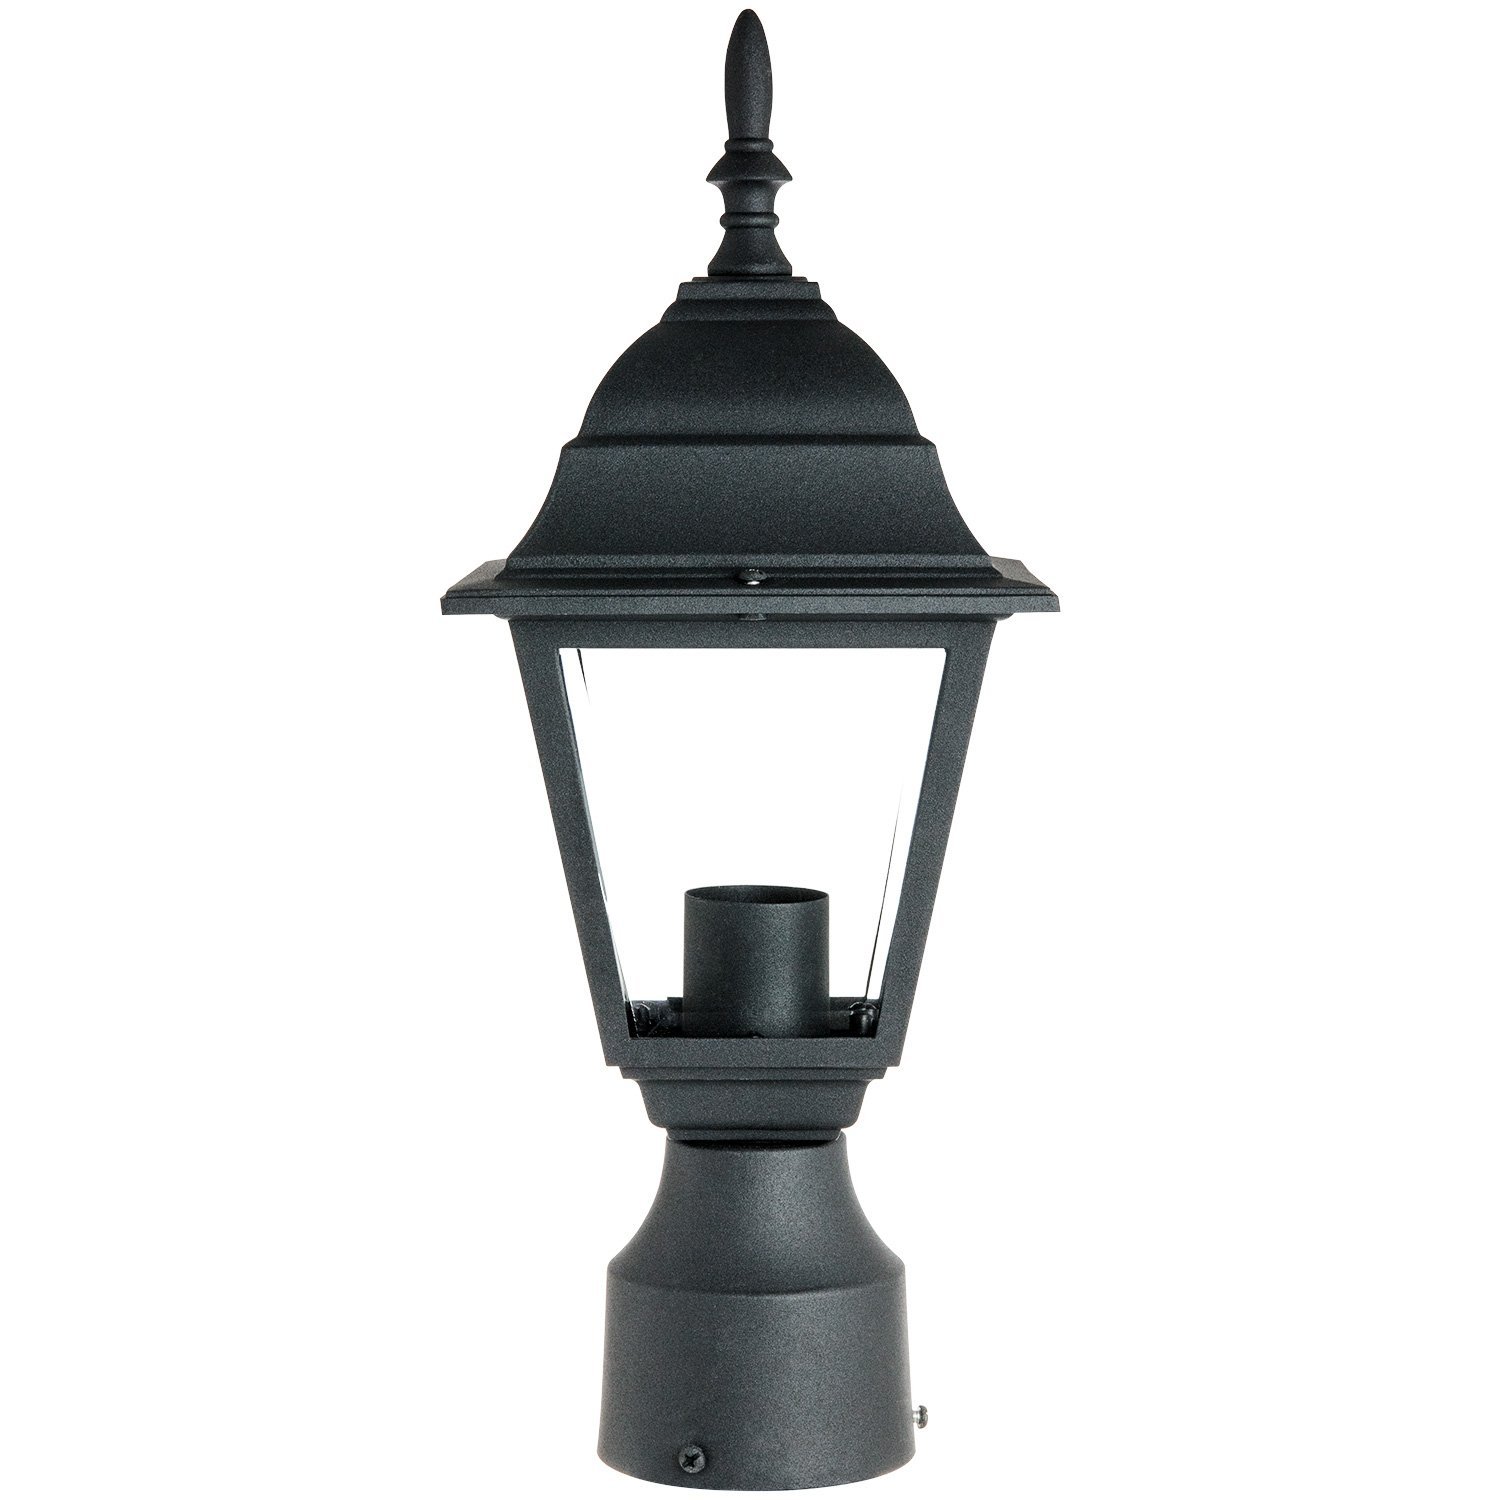 Sunlite ODI1150 15-Inch Decorative Light Post Outdoor Fixture, Black ...